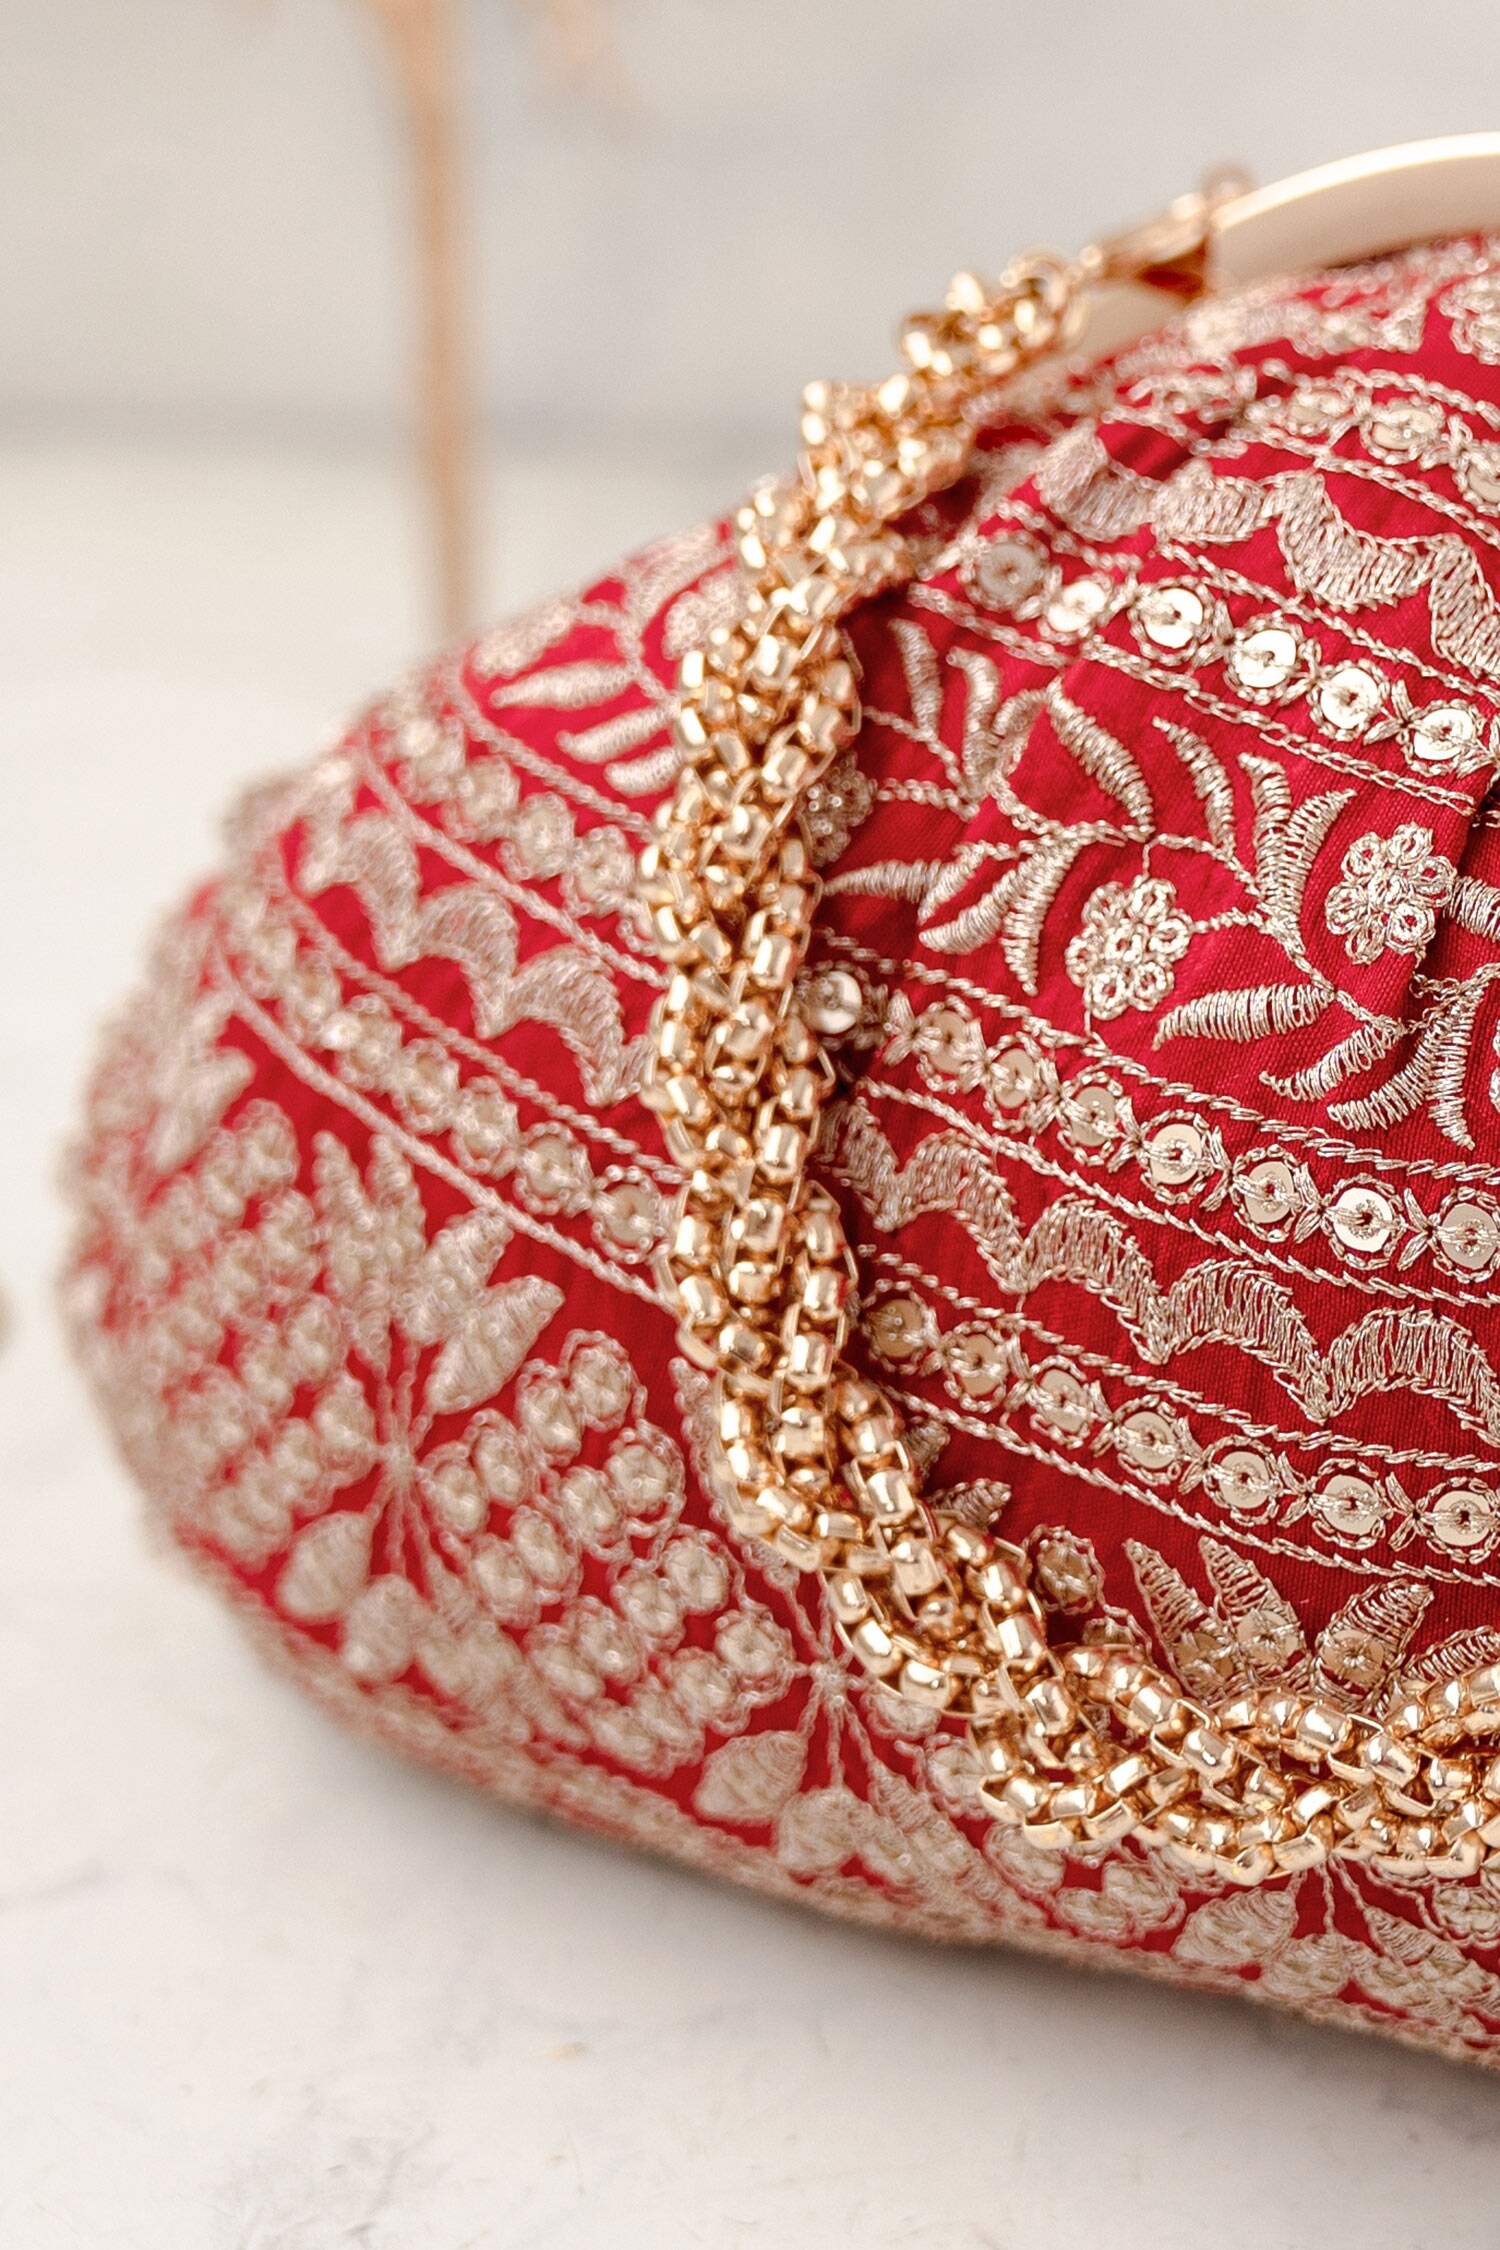 Hawk Embroider Designer Inspired Handbag for Woman Zardosi Sequin